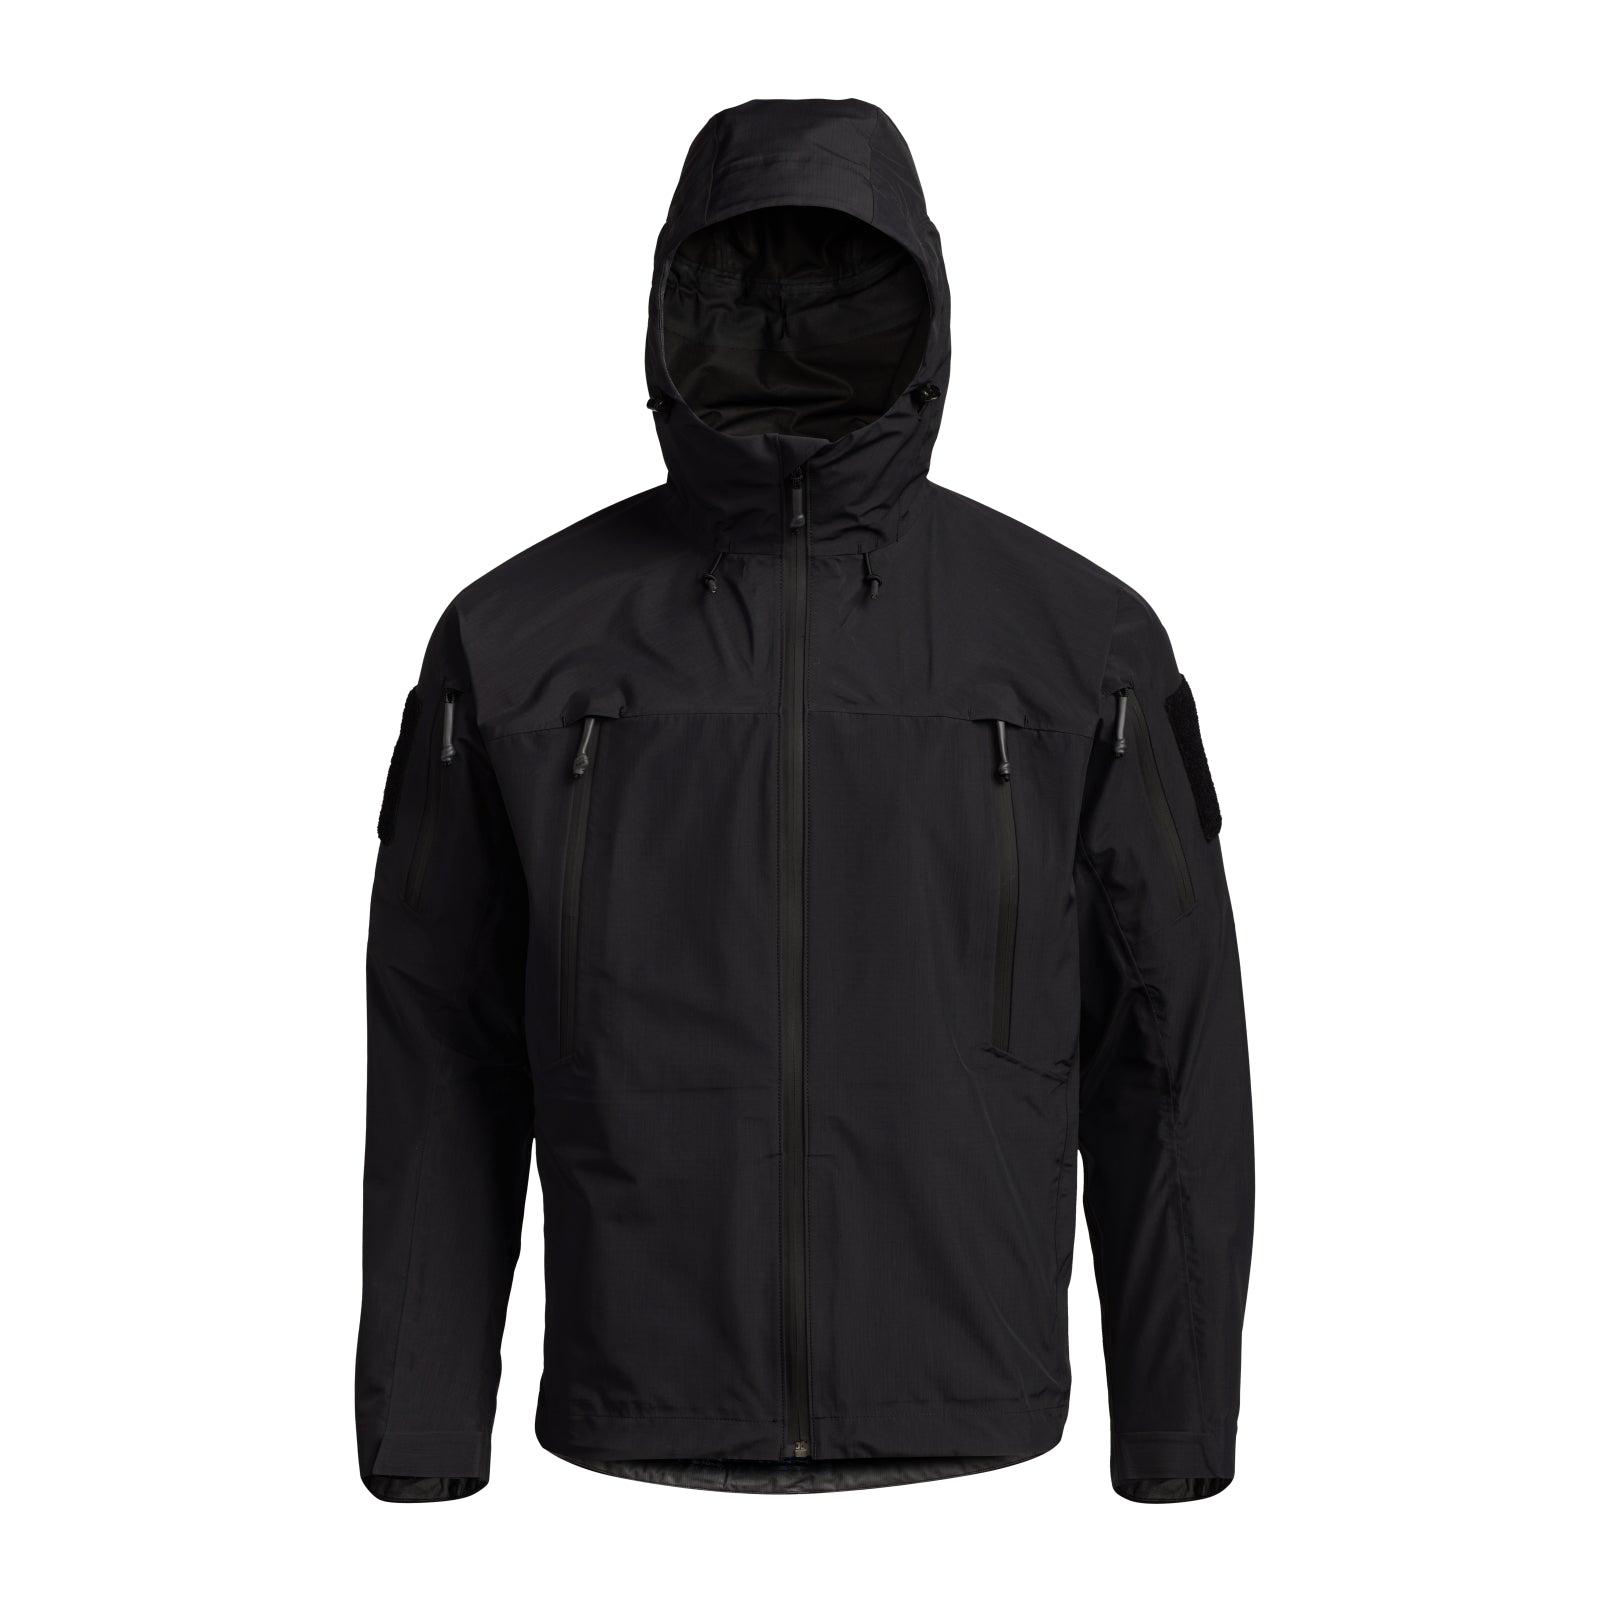 Wet Weather Protective Jacket - MDW (Black) – Arrowhead Kred